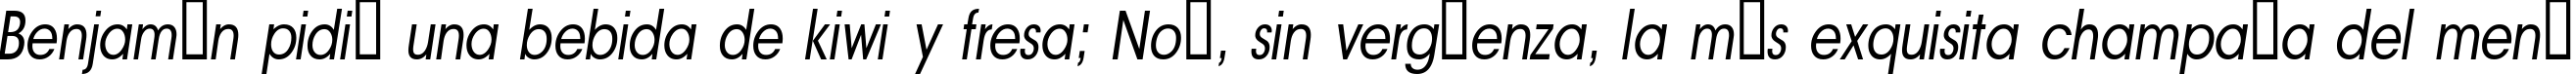 Пример написания шрифтом a_AvanteNrBook Italic текста на испанском